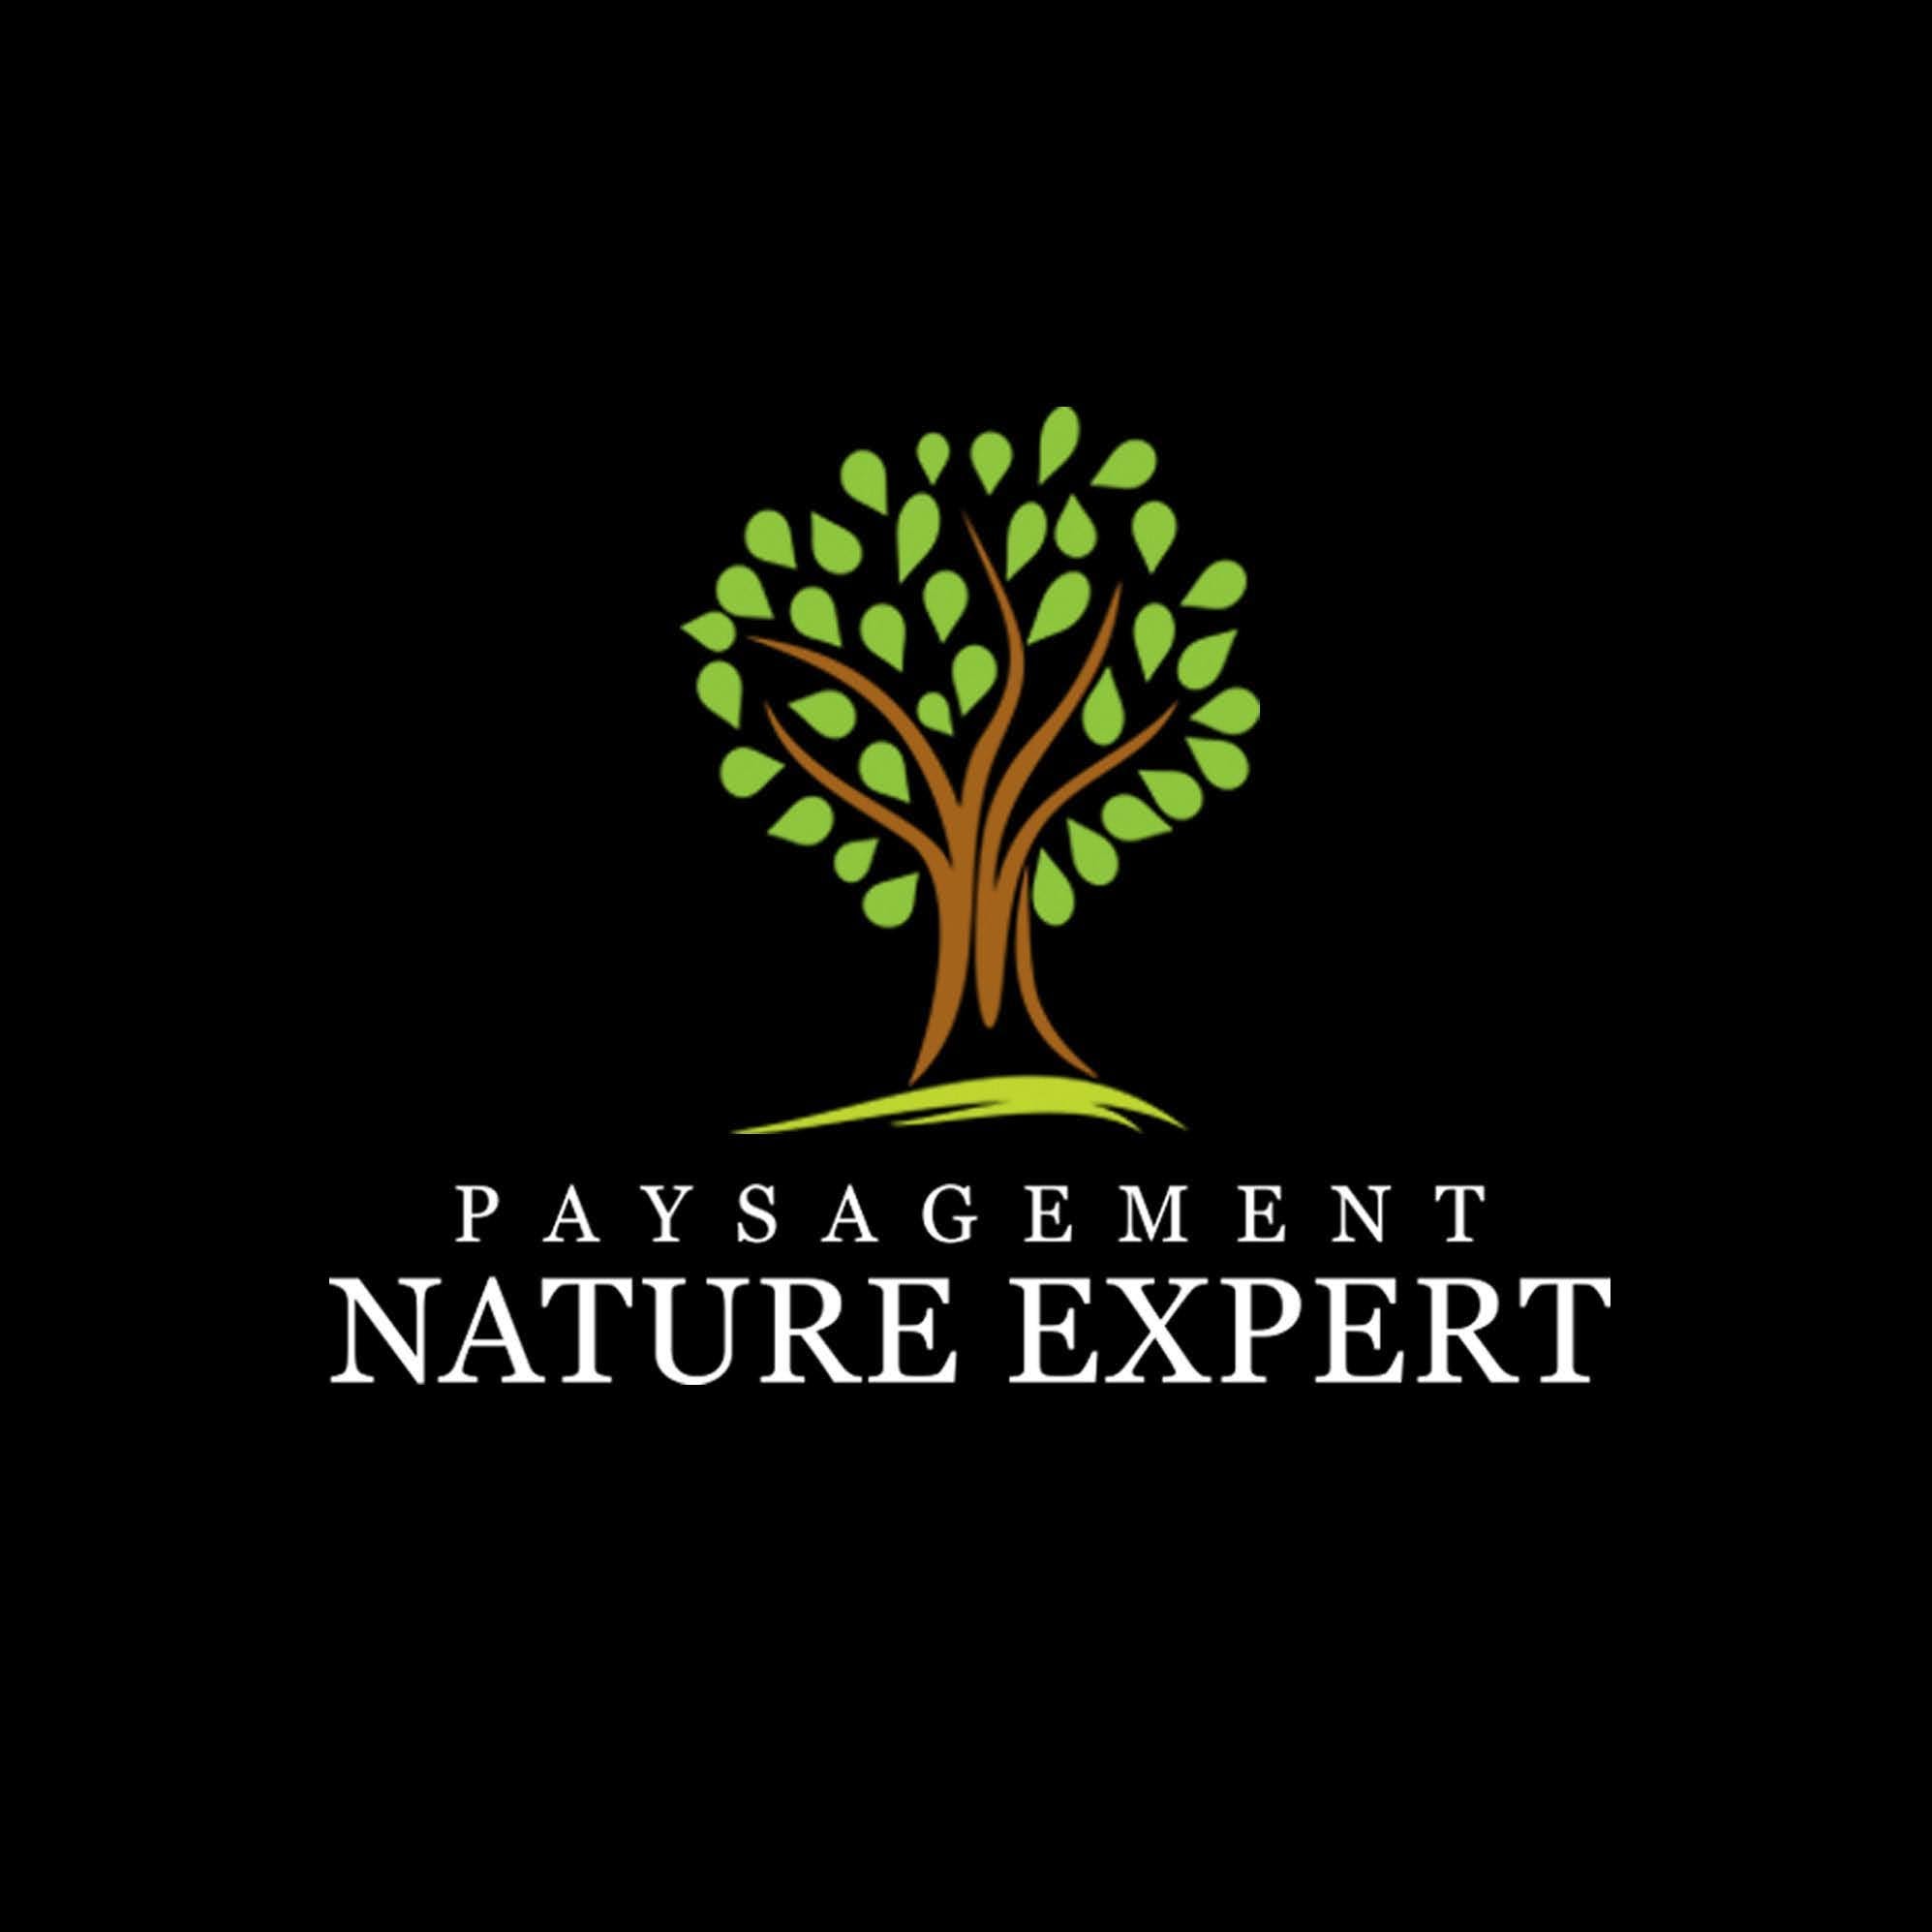 Paysagement Nature Expert Logo